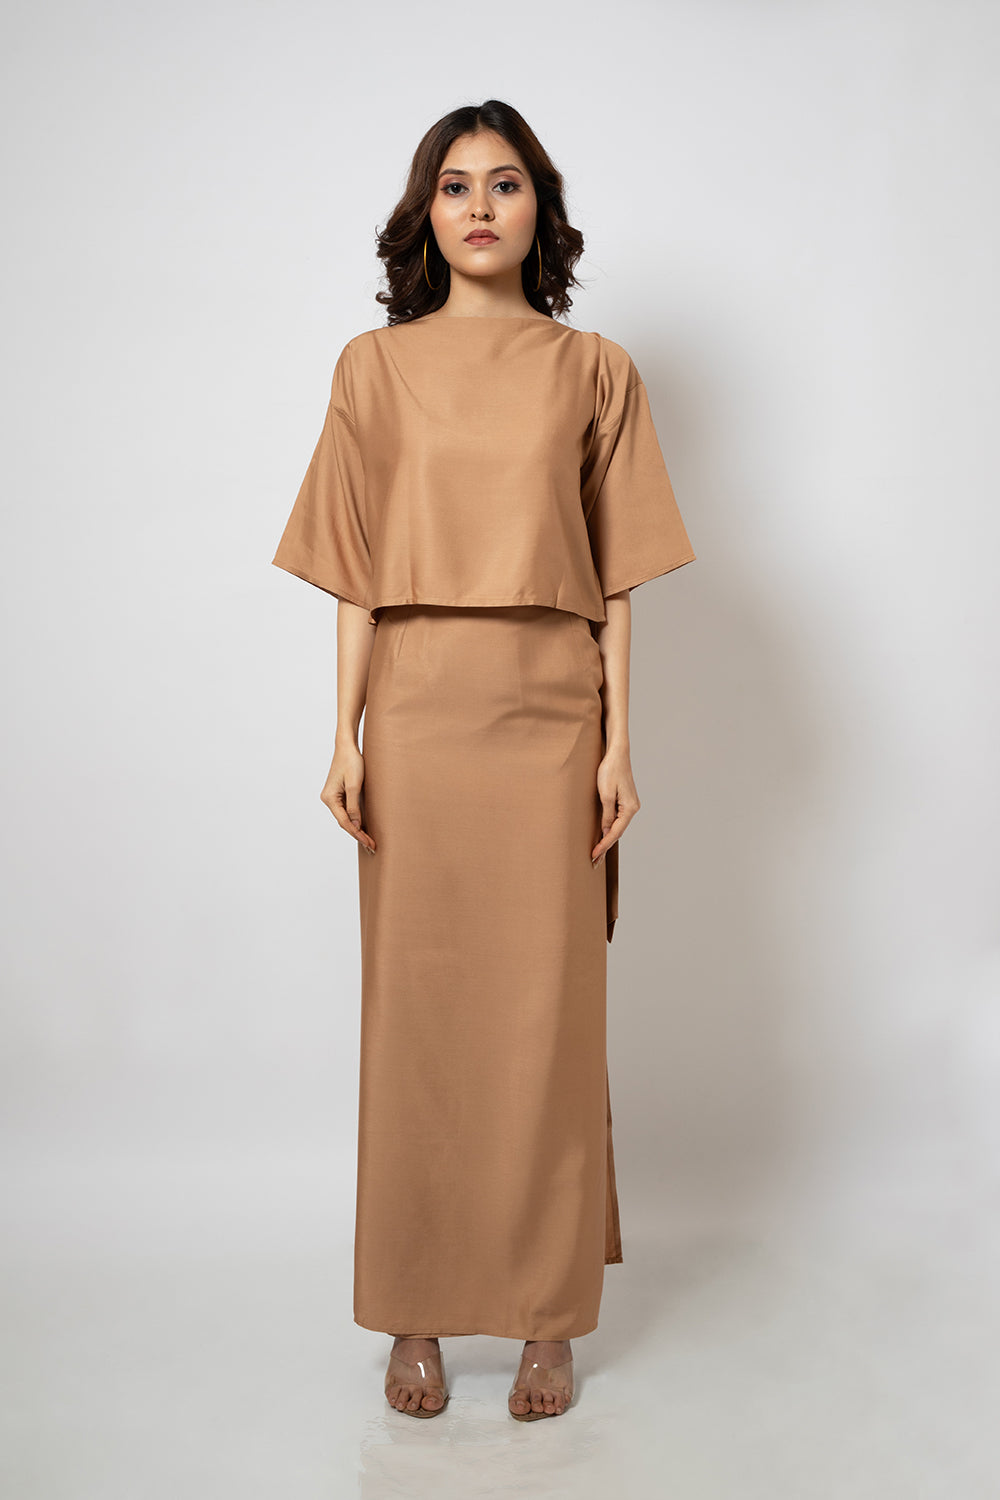 5. A Beige cotton silk blend co-ord crop top and skirt set